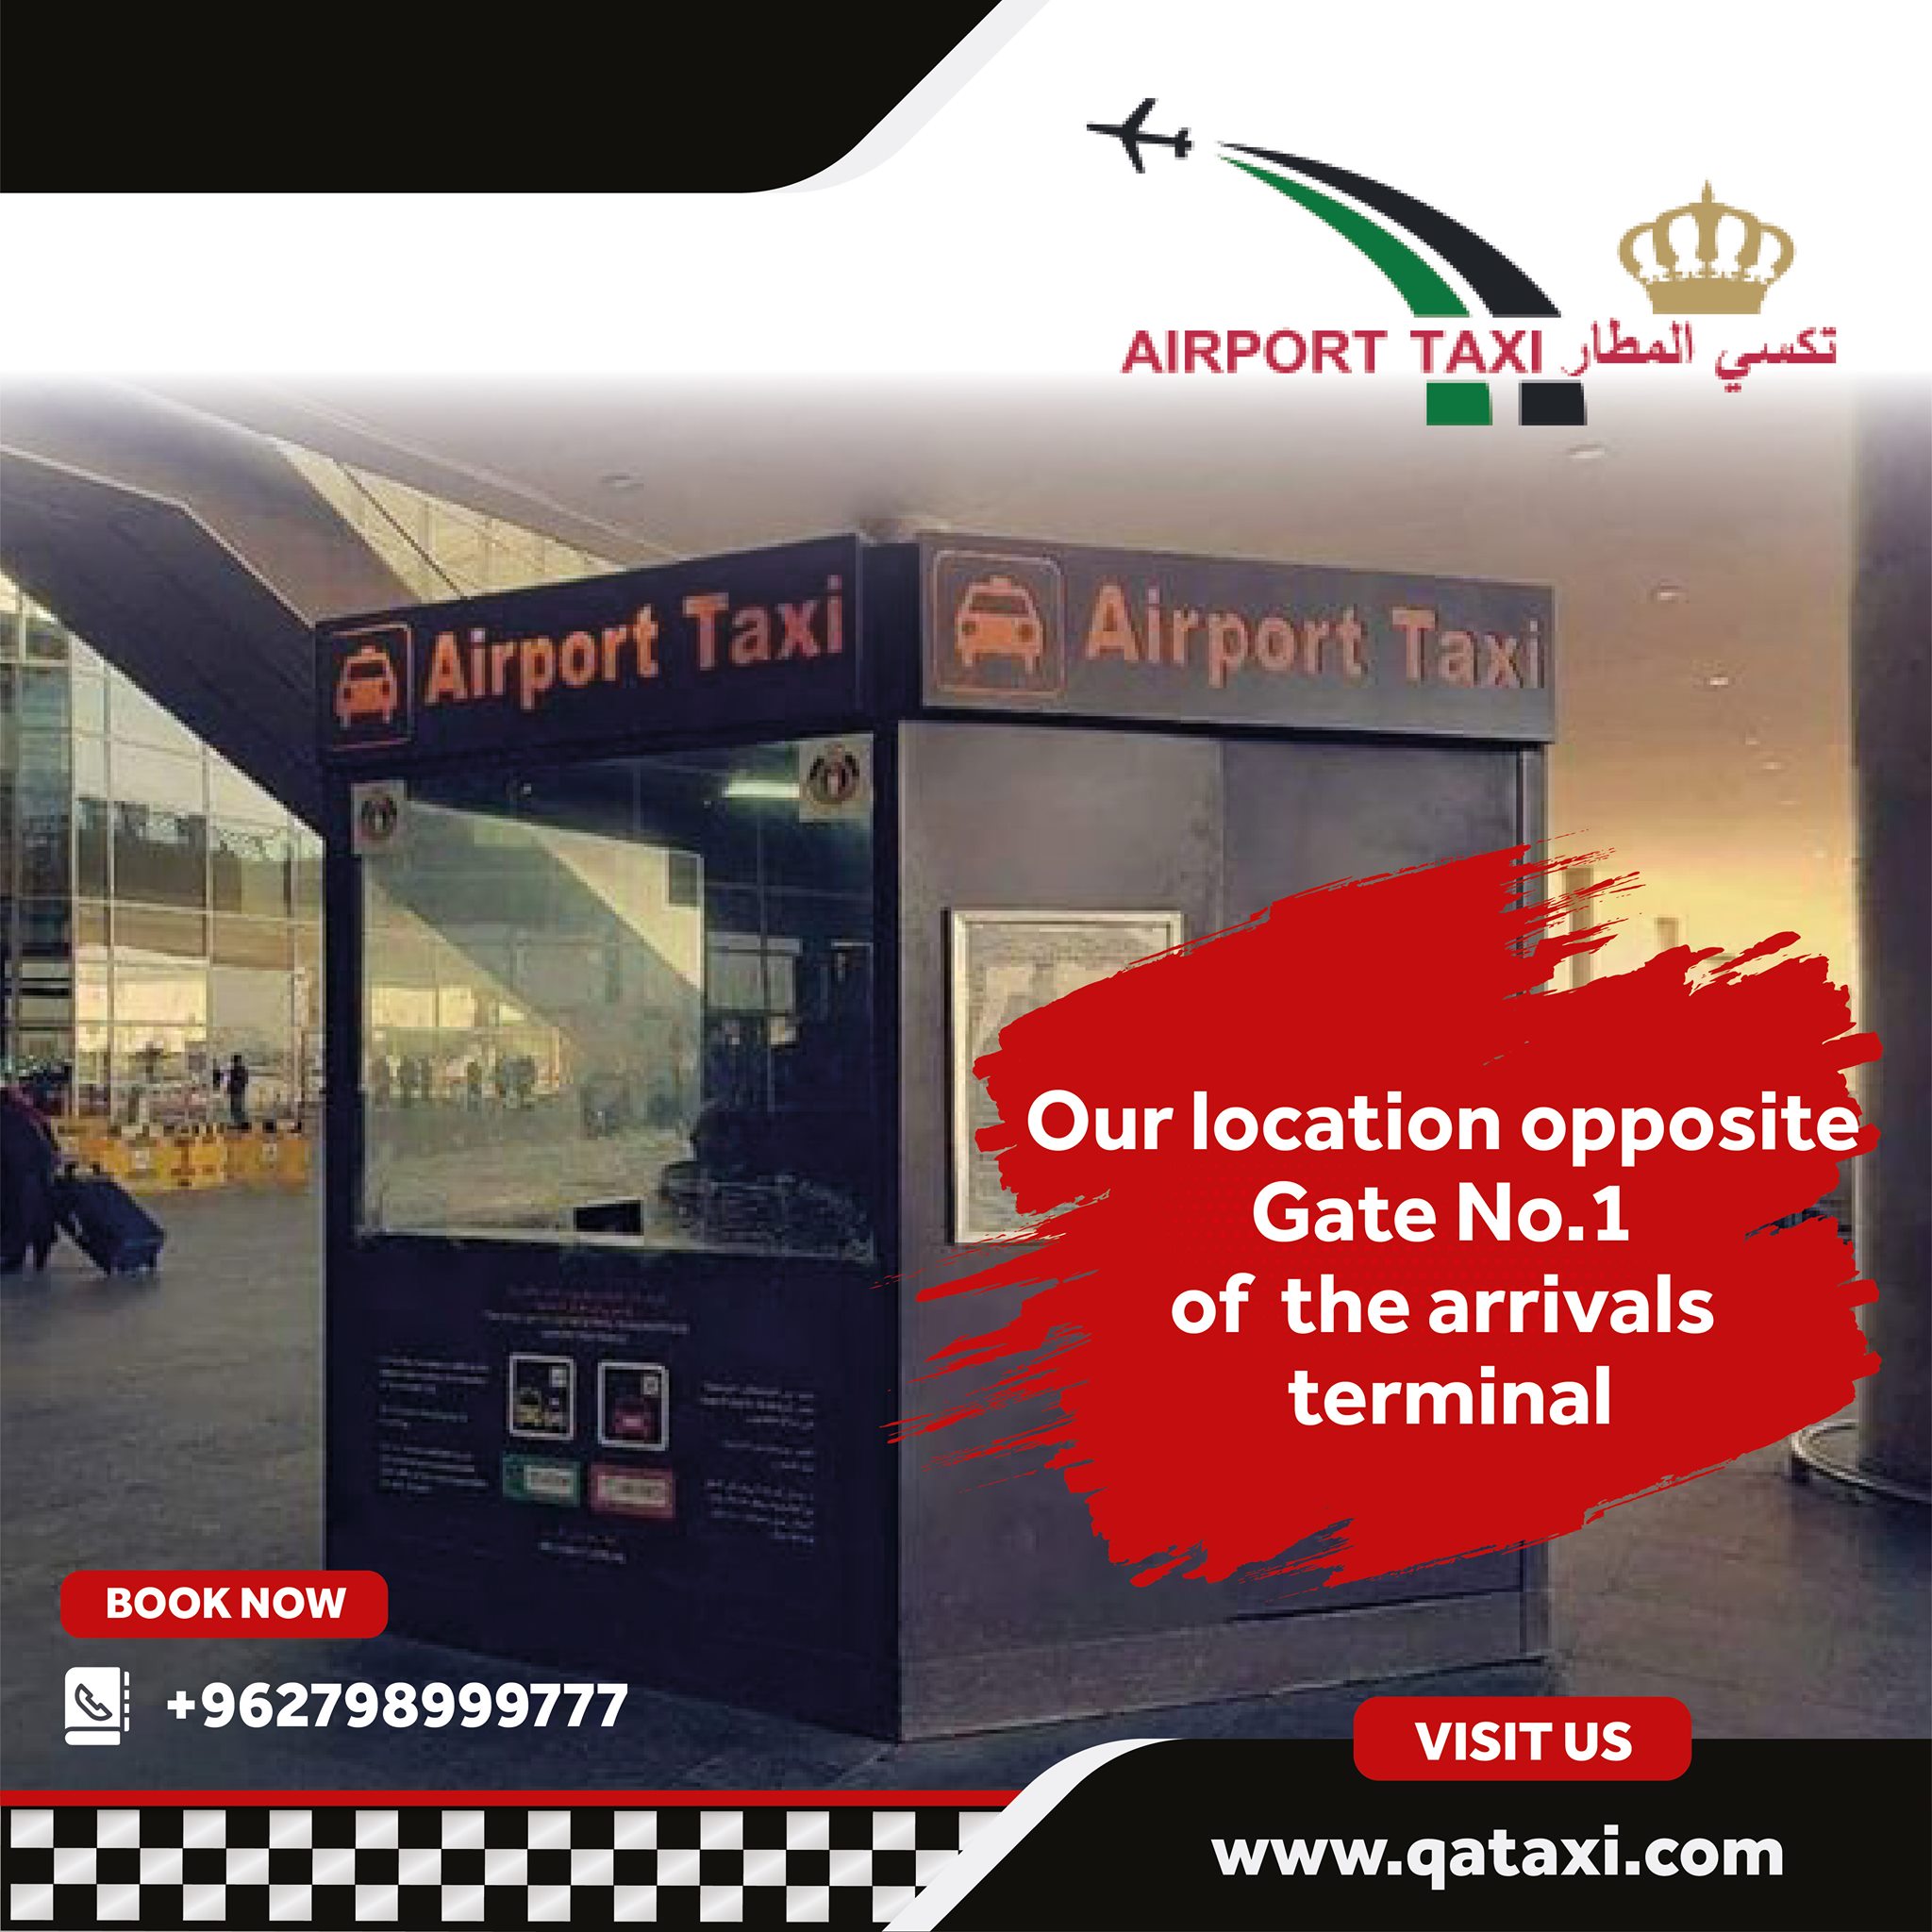 Taxi Queen Alia International Airport